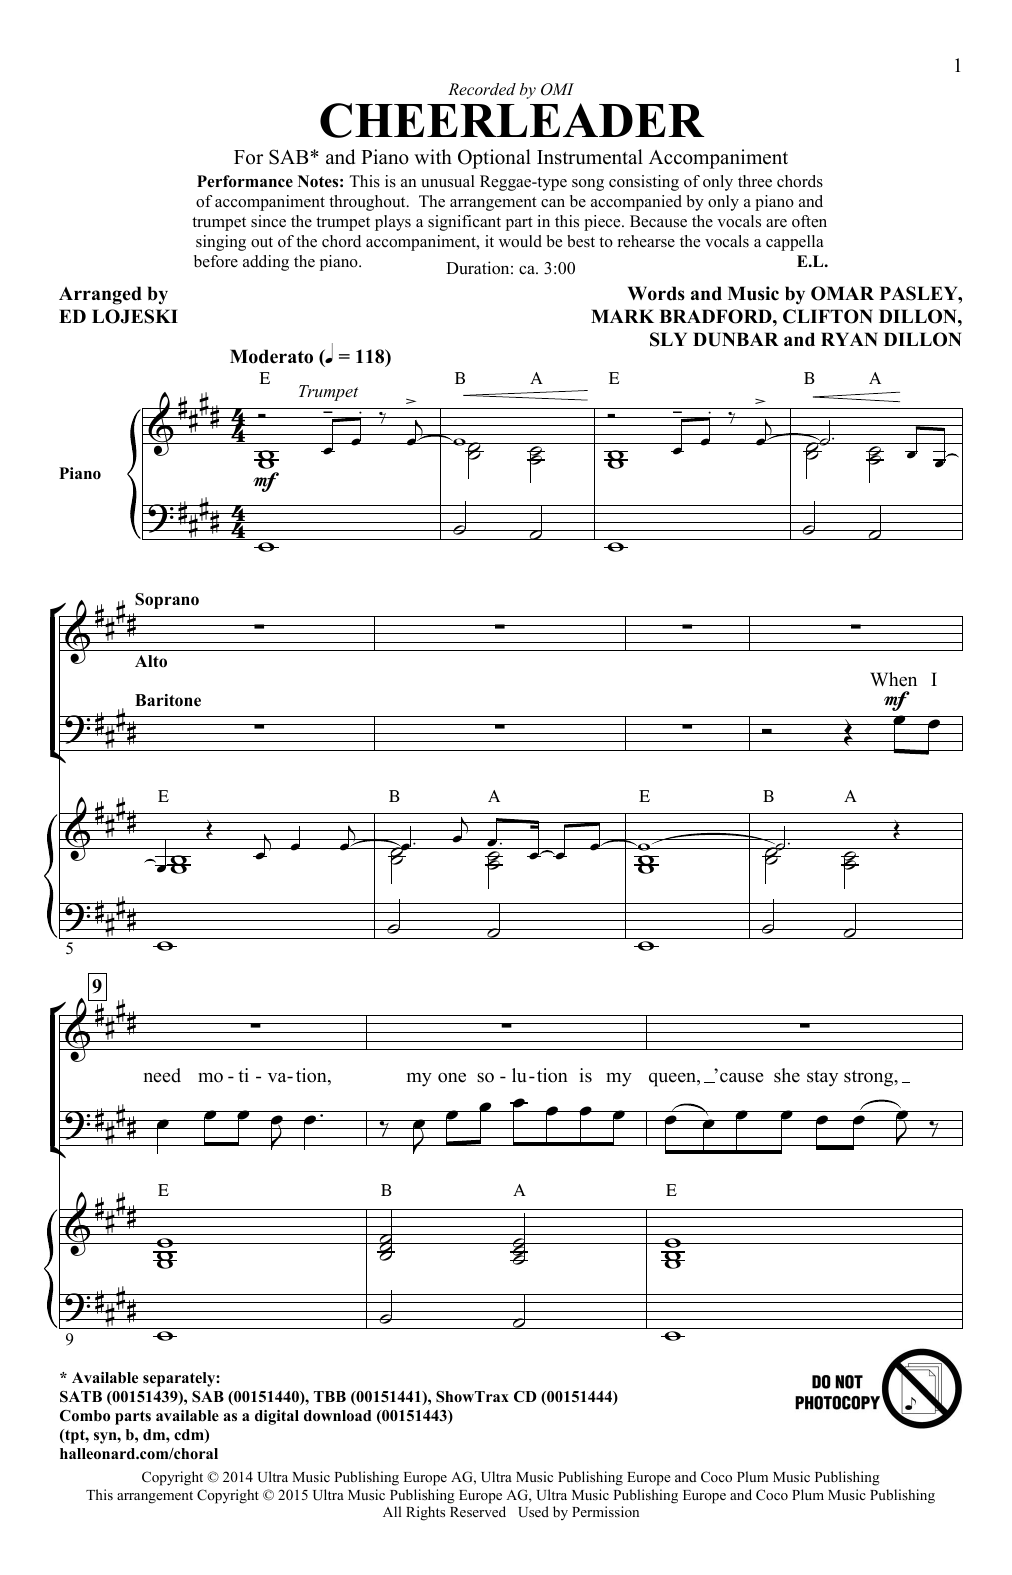 Omi Cheerleader (arr. Ed Lojeski) sheet music notes and chords arranged for SAB Choir